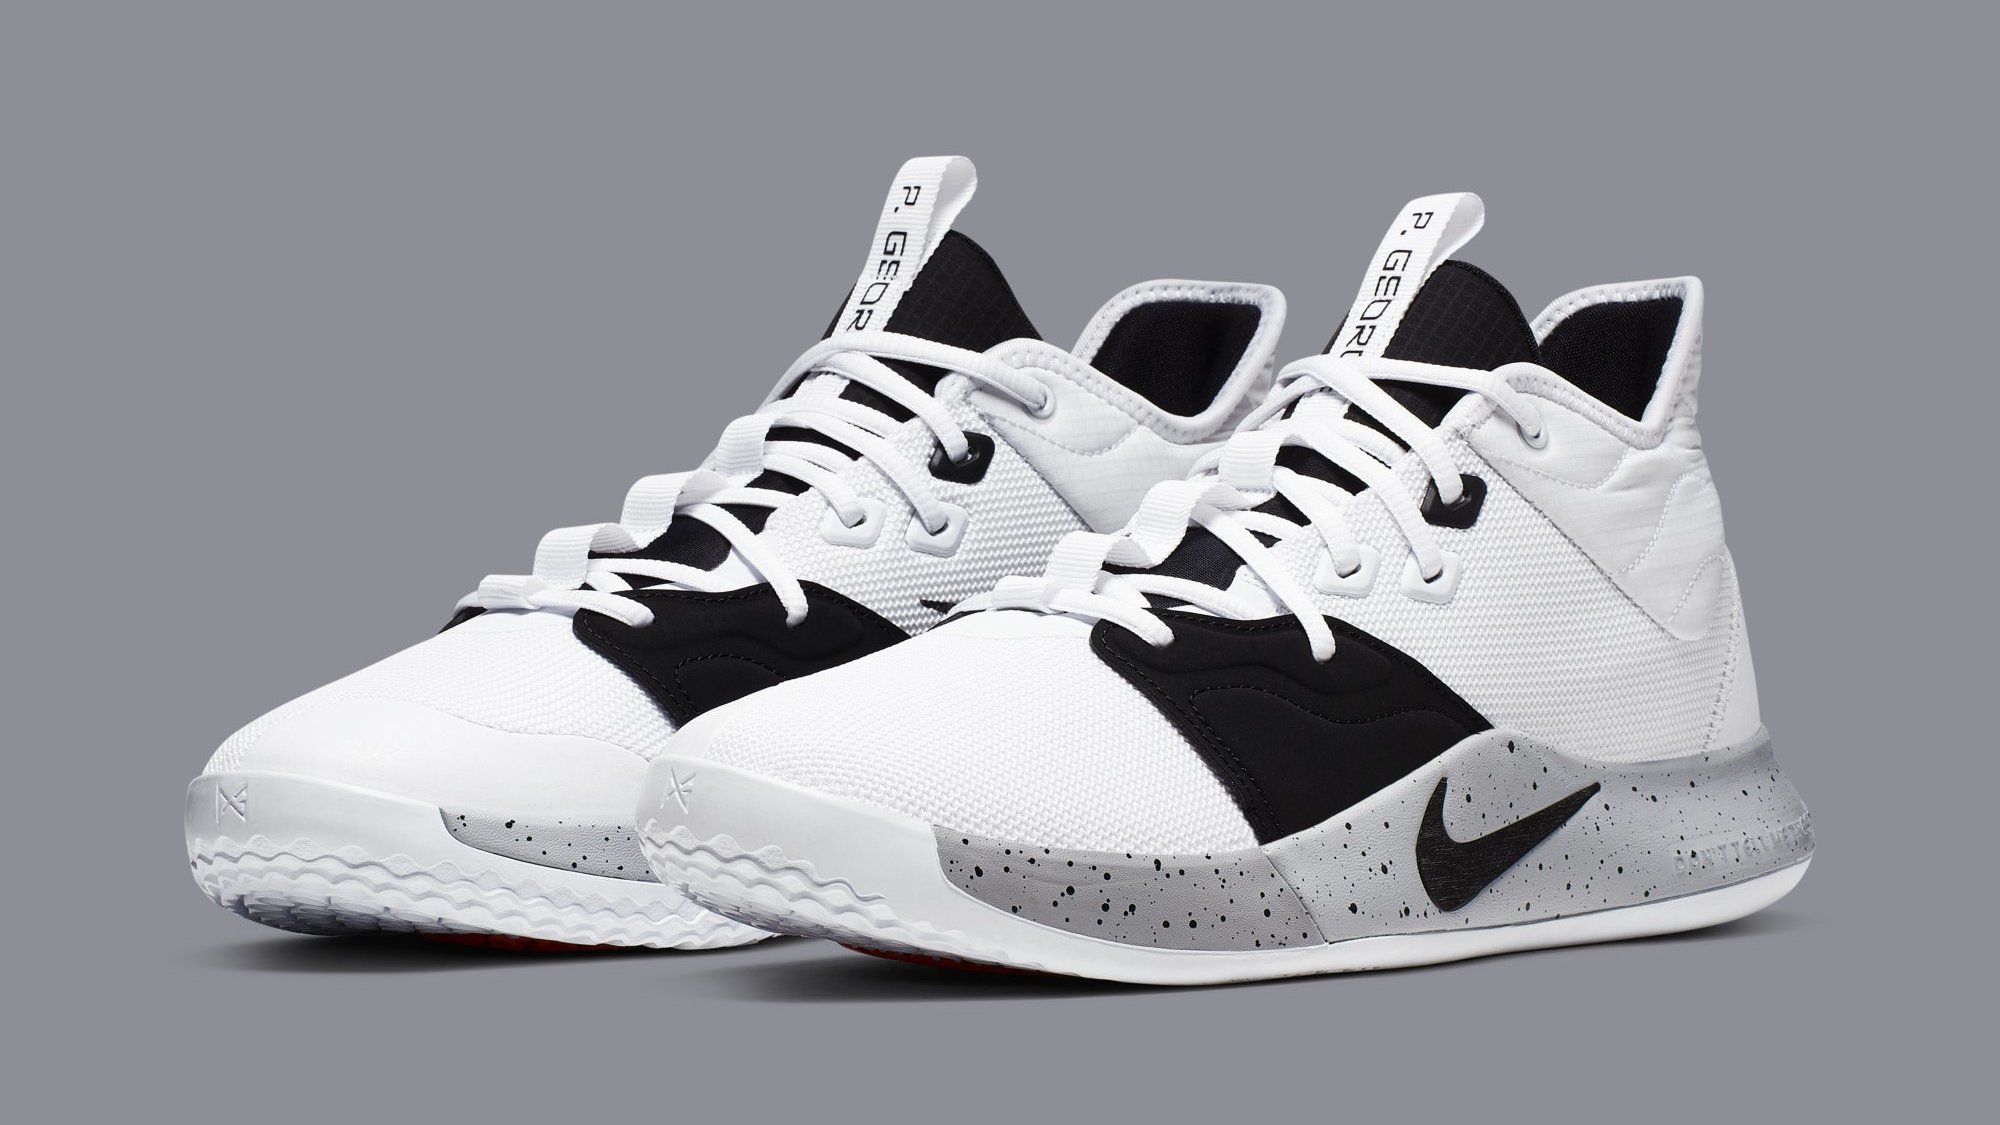 Sucio Transparente olvidar This Nike PG 3 Colorway Resembles the 'White Cement' Air Jordan 4 | Complex